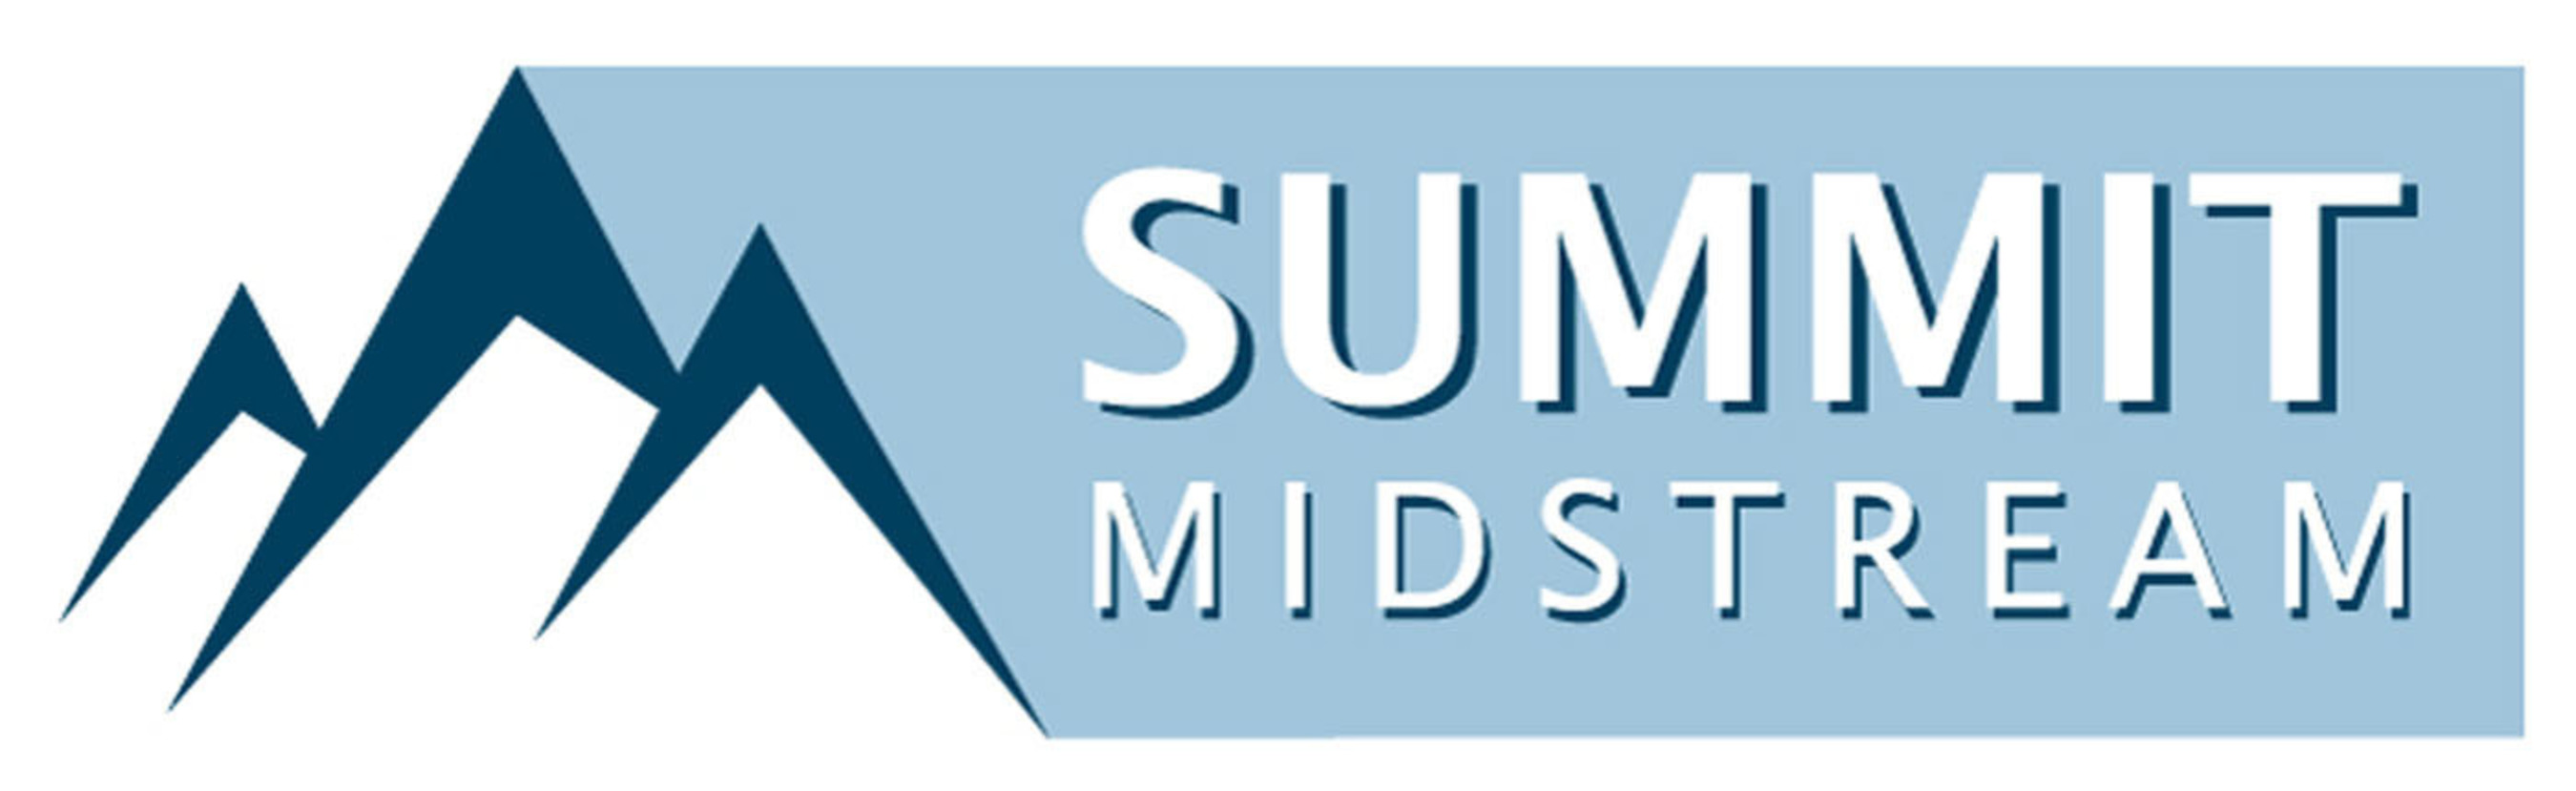 Summit Midstream Partners Logo. (PRNewsFoto/Summit Midstream Partners) (PRNewsFoto/)